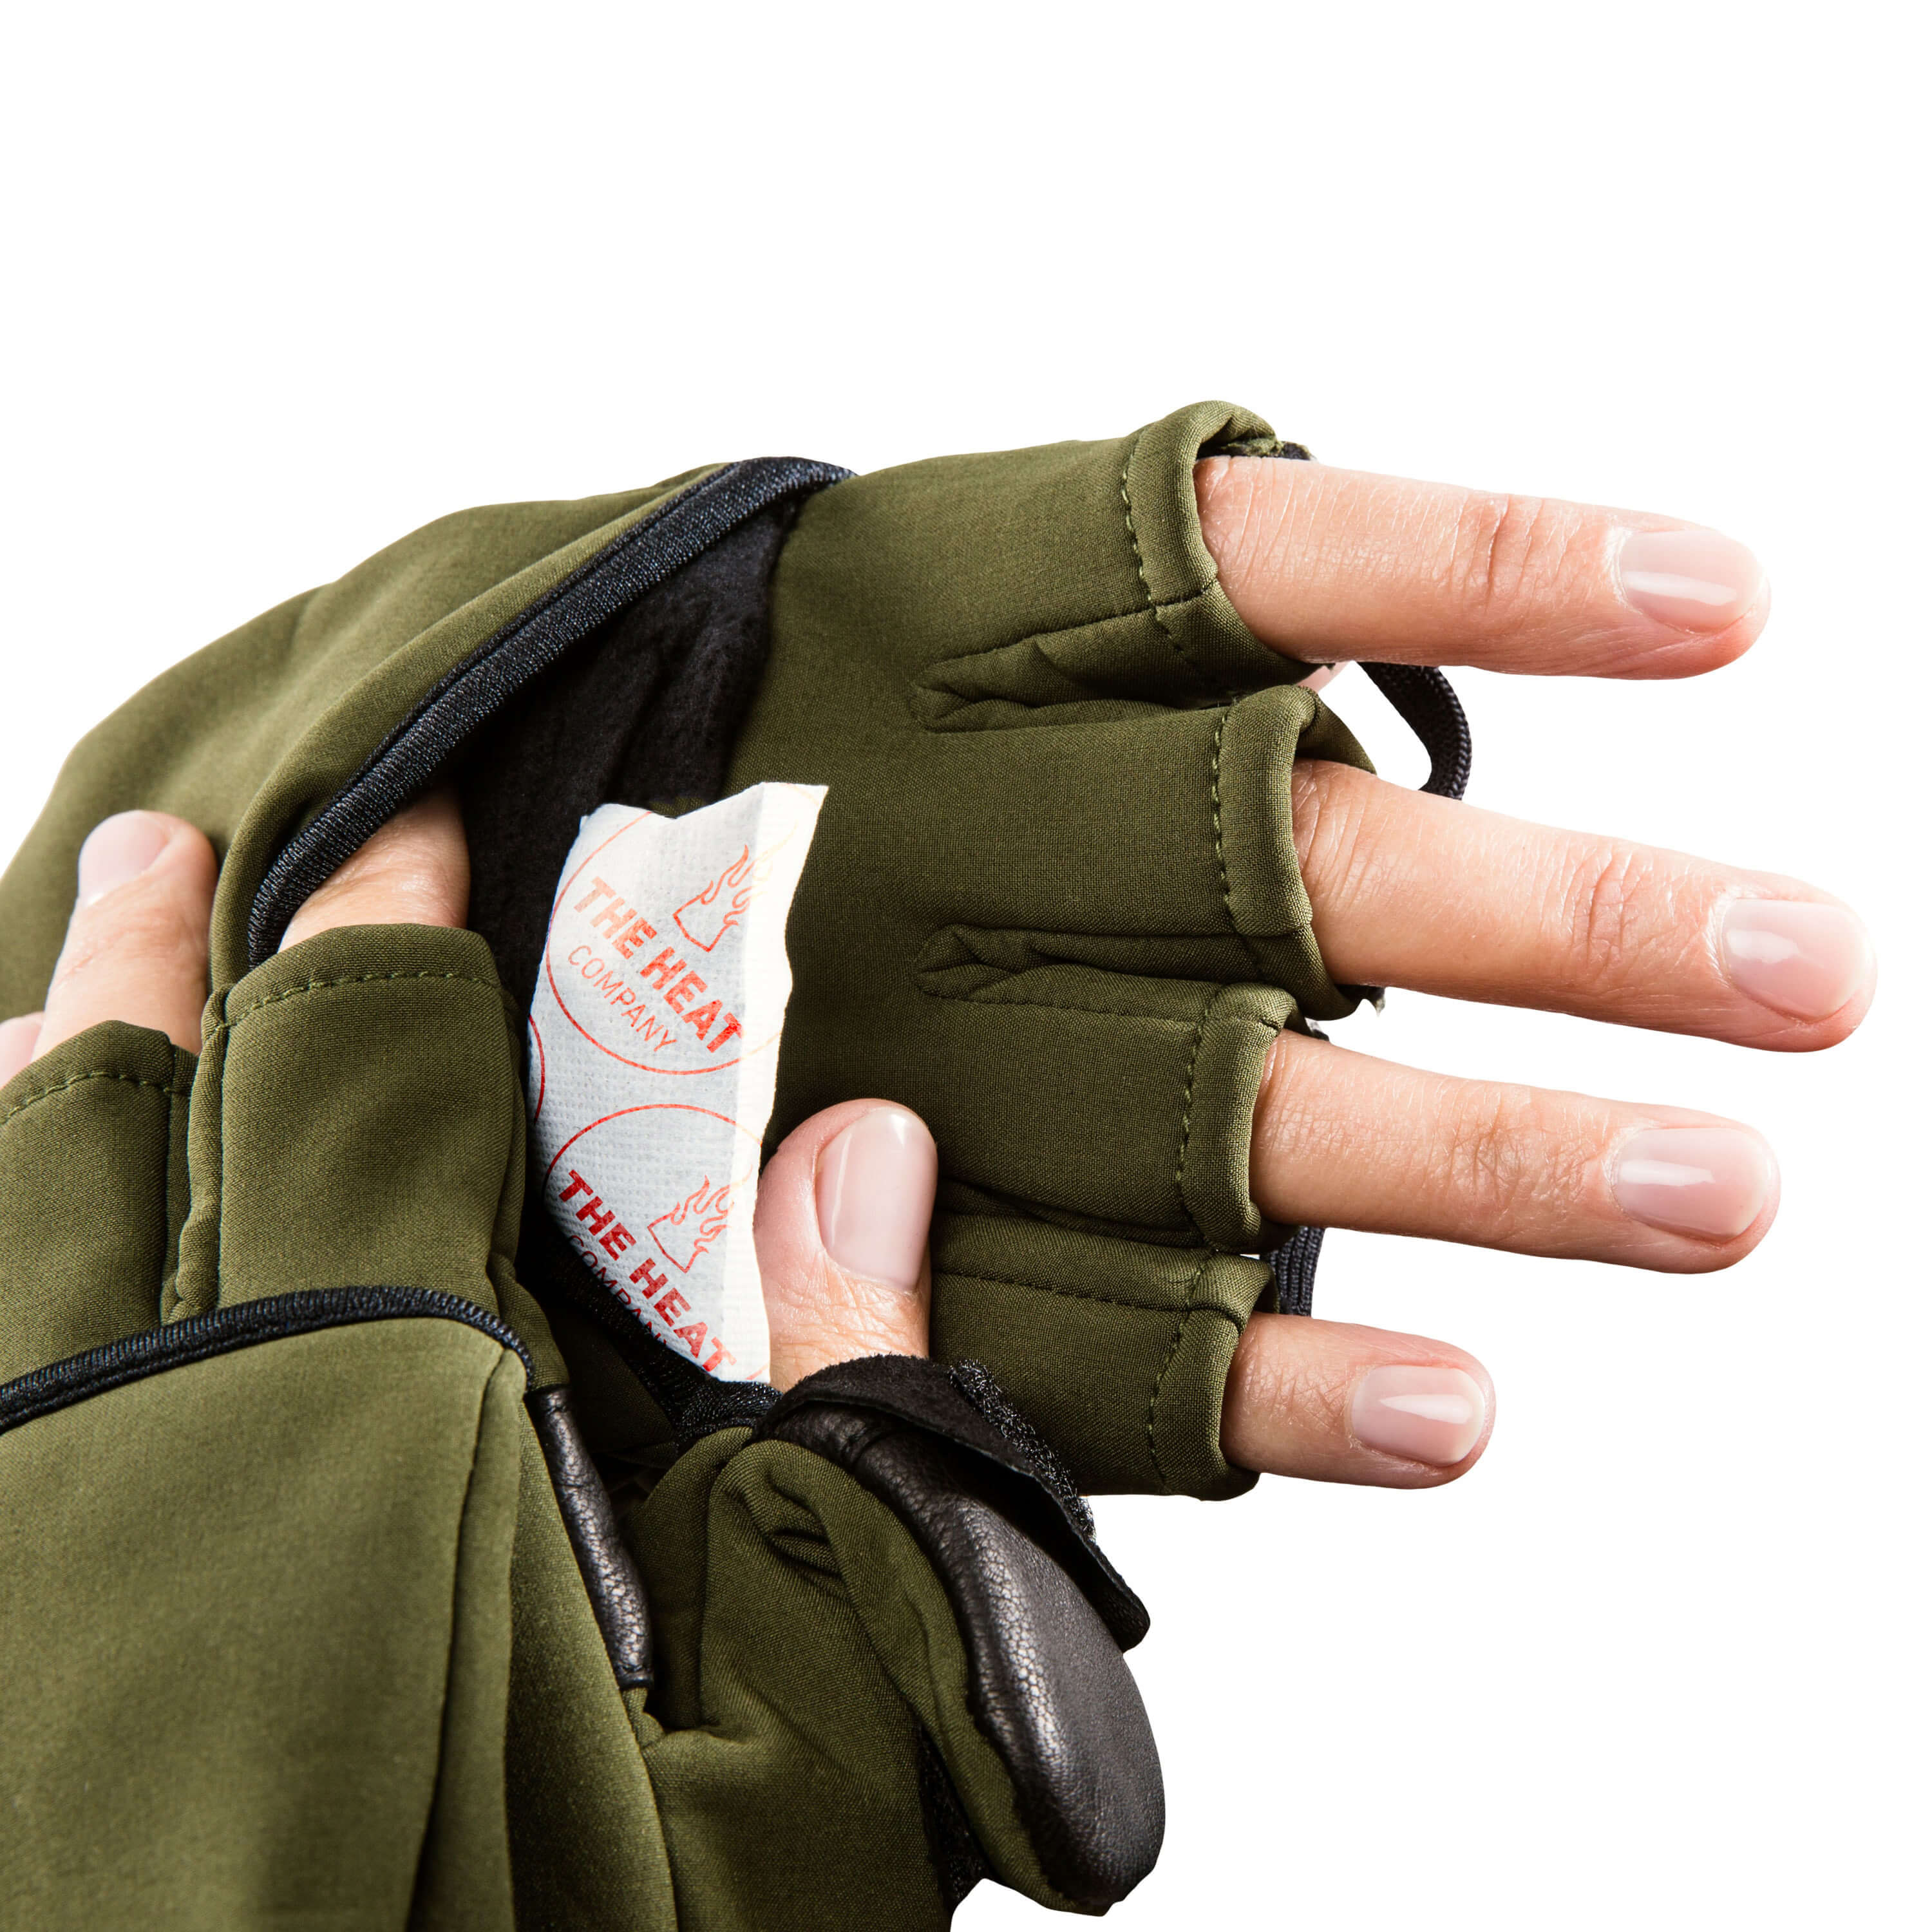 Hot Hands Hand Warmers outdoor HotHands Pocket Heat Feet Gloves camping hiking 